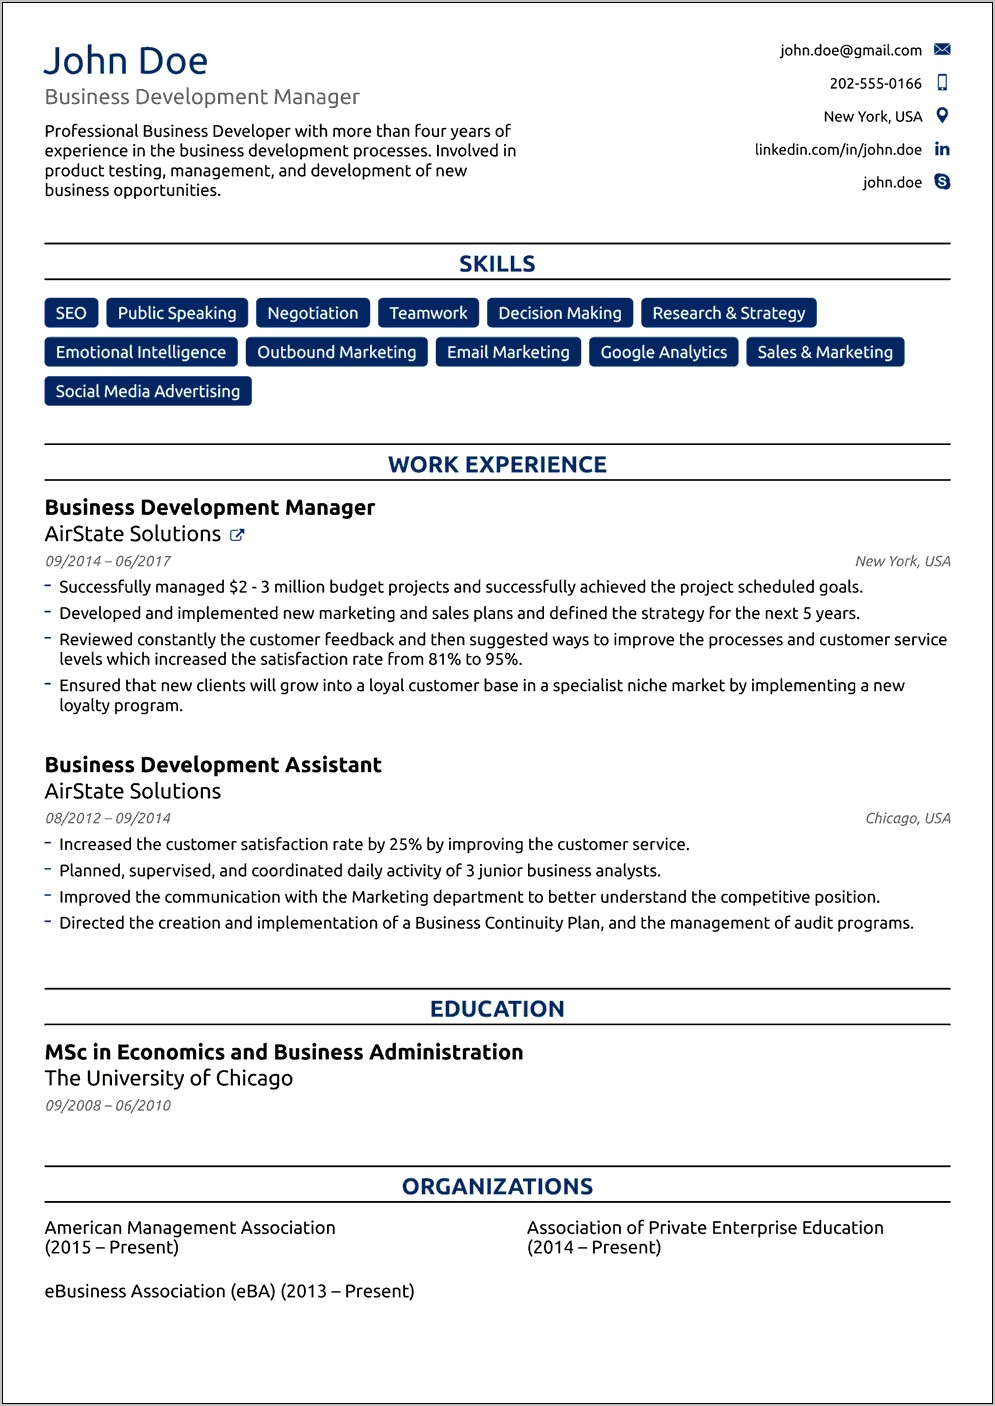 Online Resume Format For Job